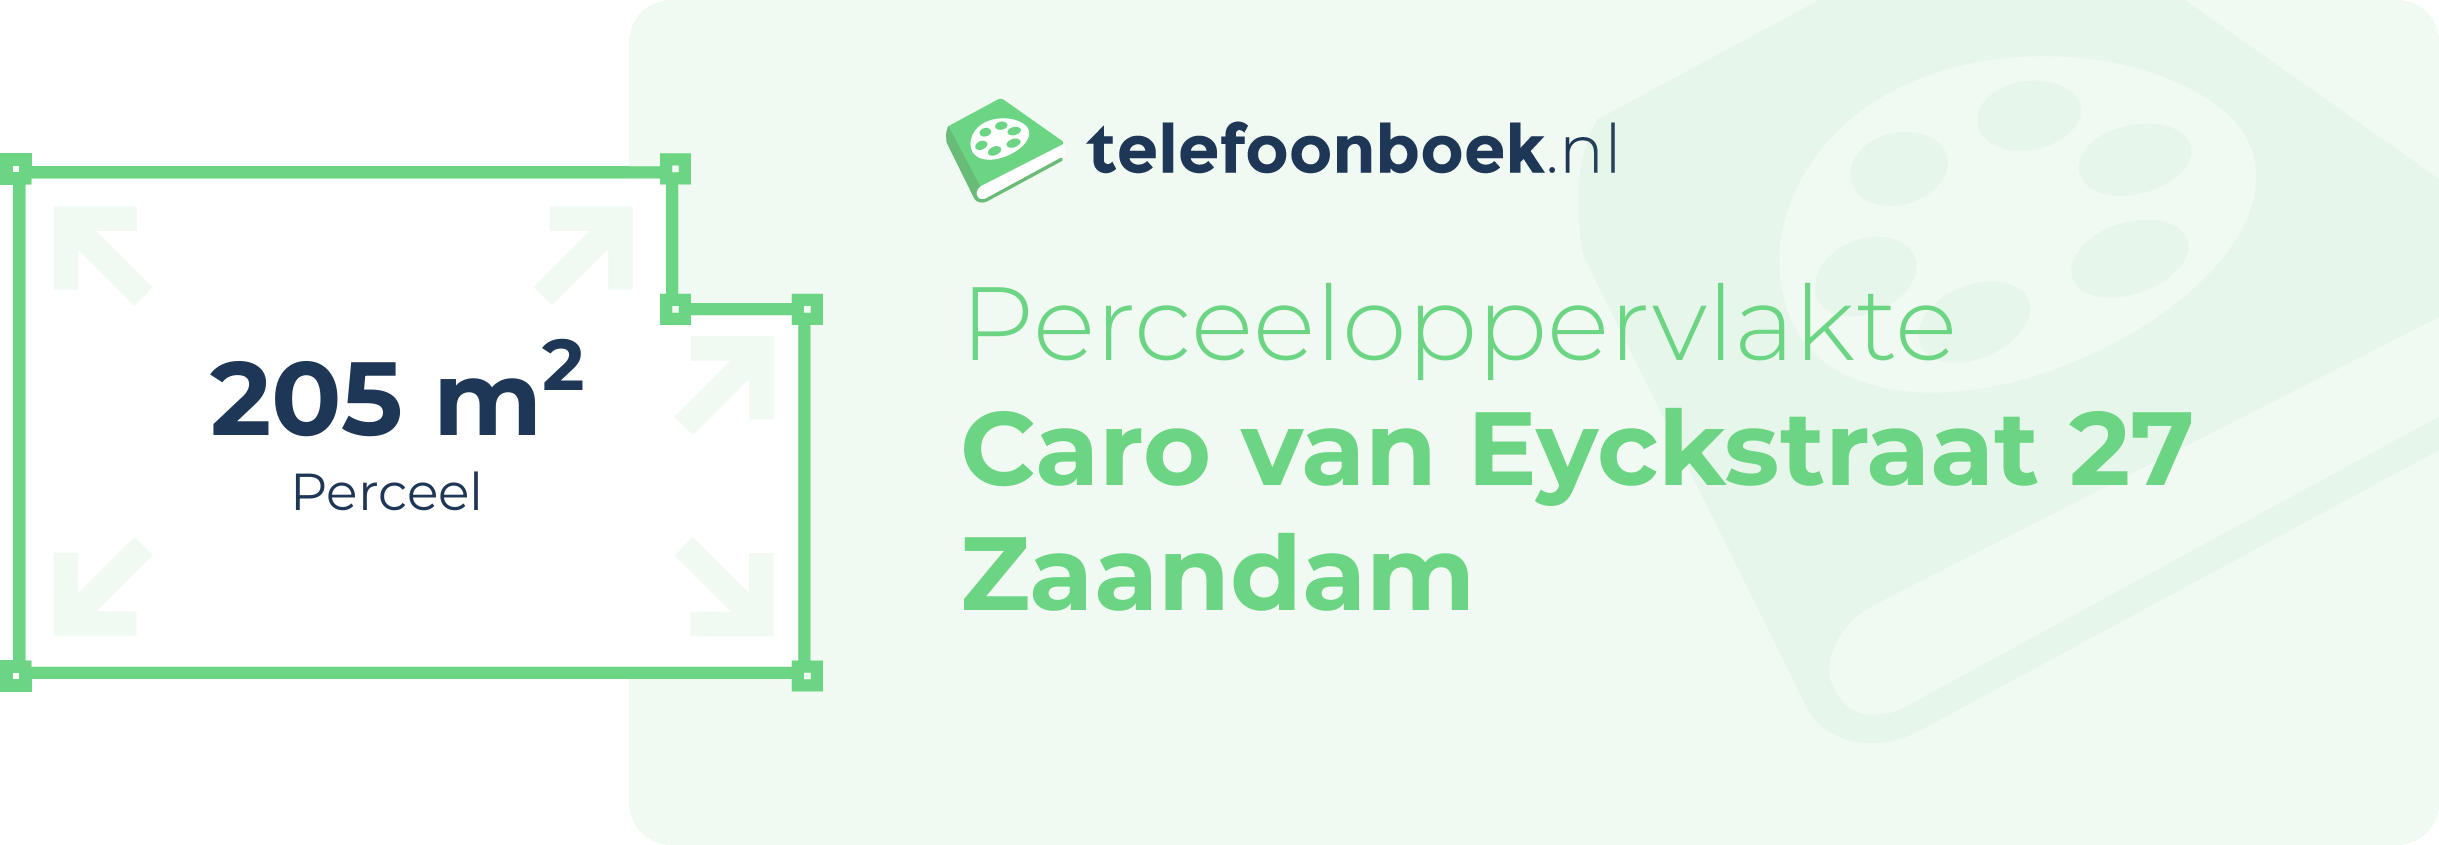 Perceeloppervlakte Caro Van Eyckstraat 27 Zaandam